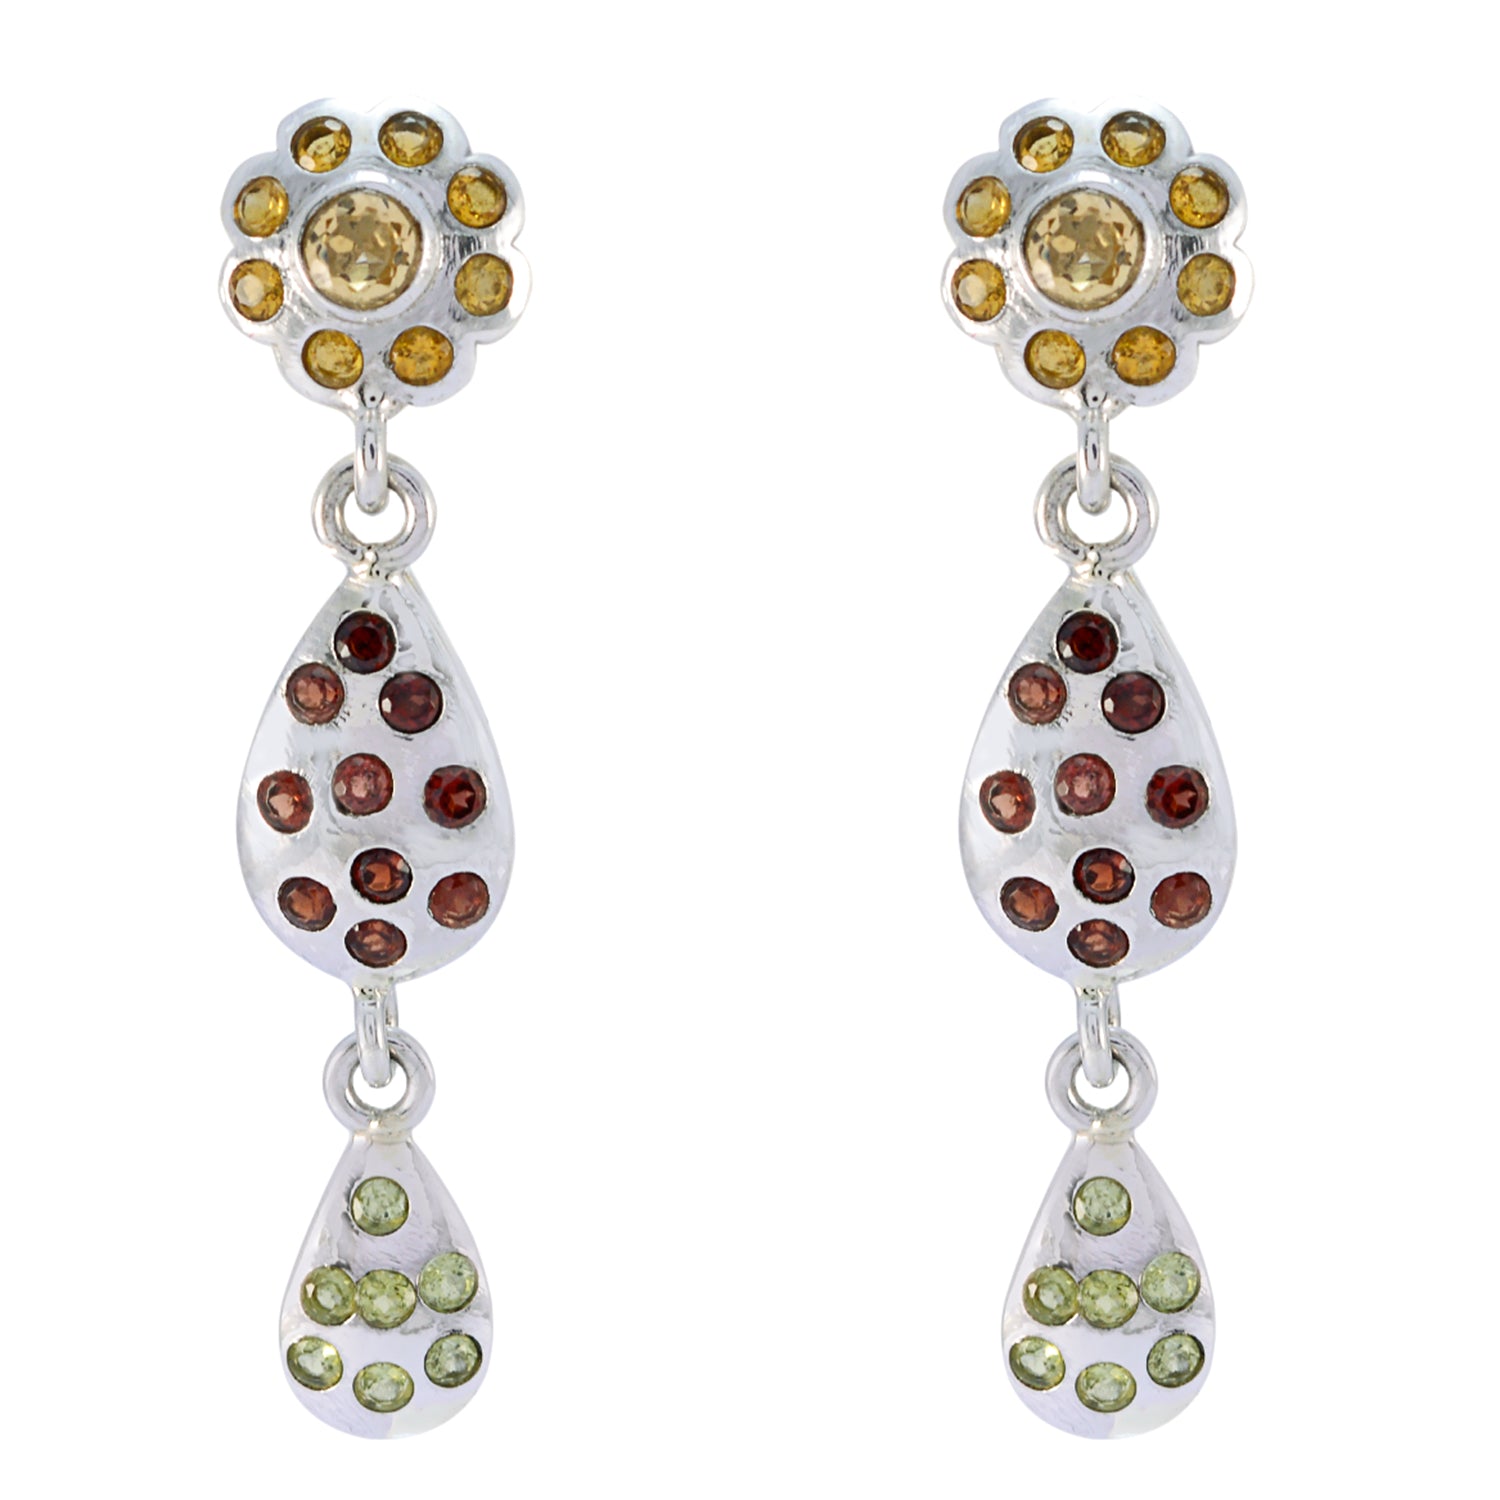 Riyo Genuine Gems round Faceted Multi Multi Stone Silver Earrings gift for graduation